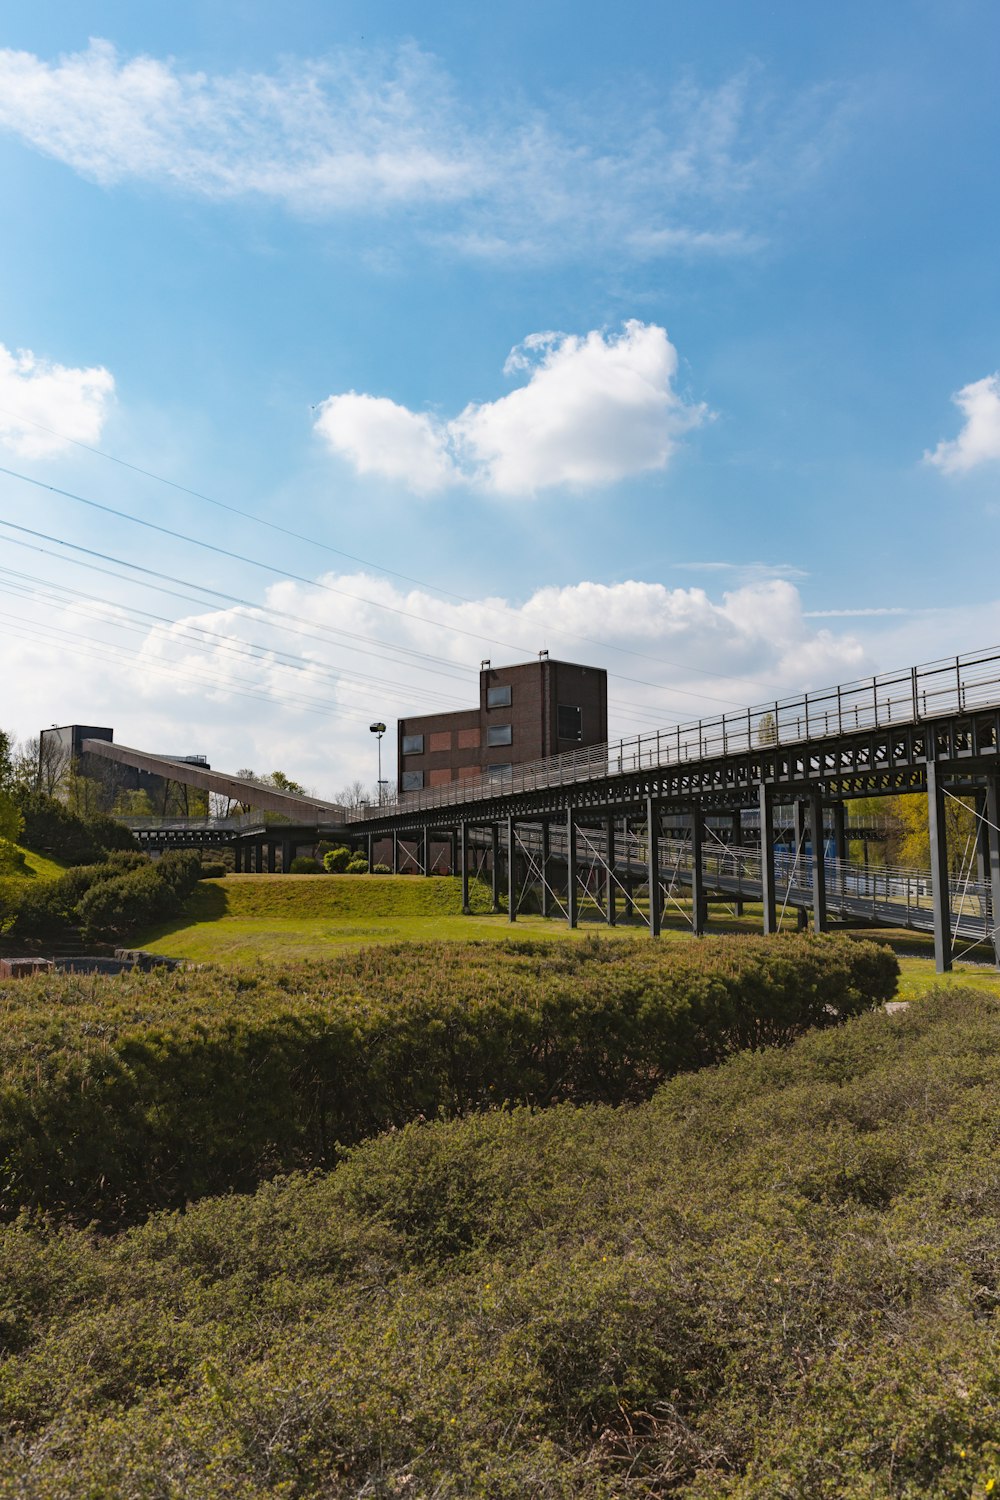 a train track going over a bridge over a lush green field